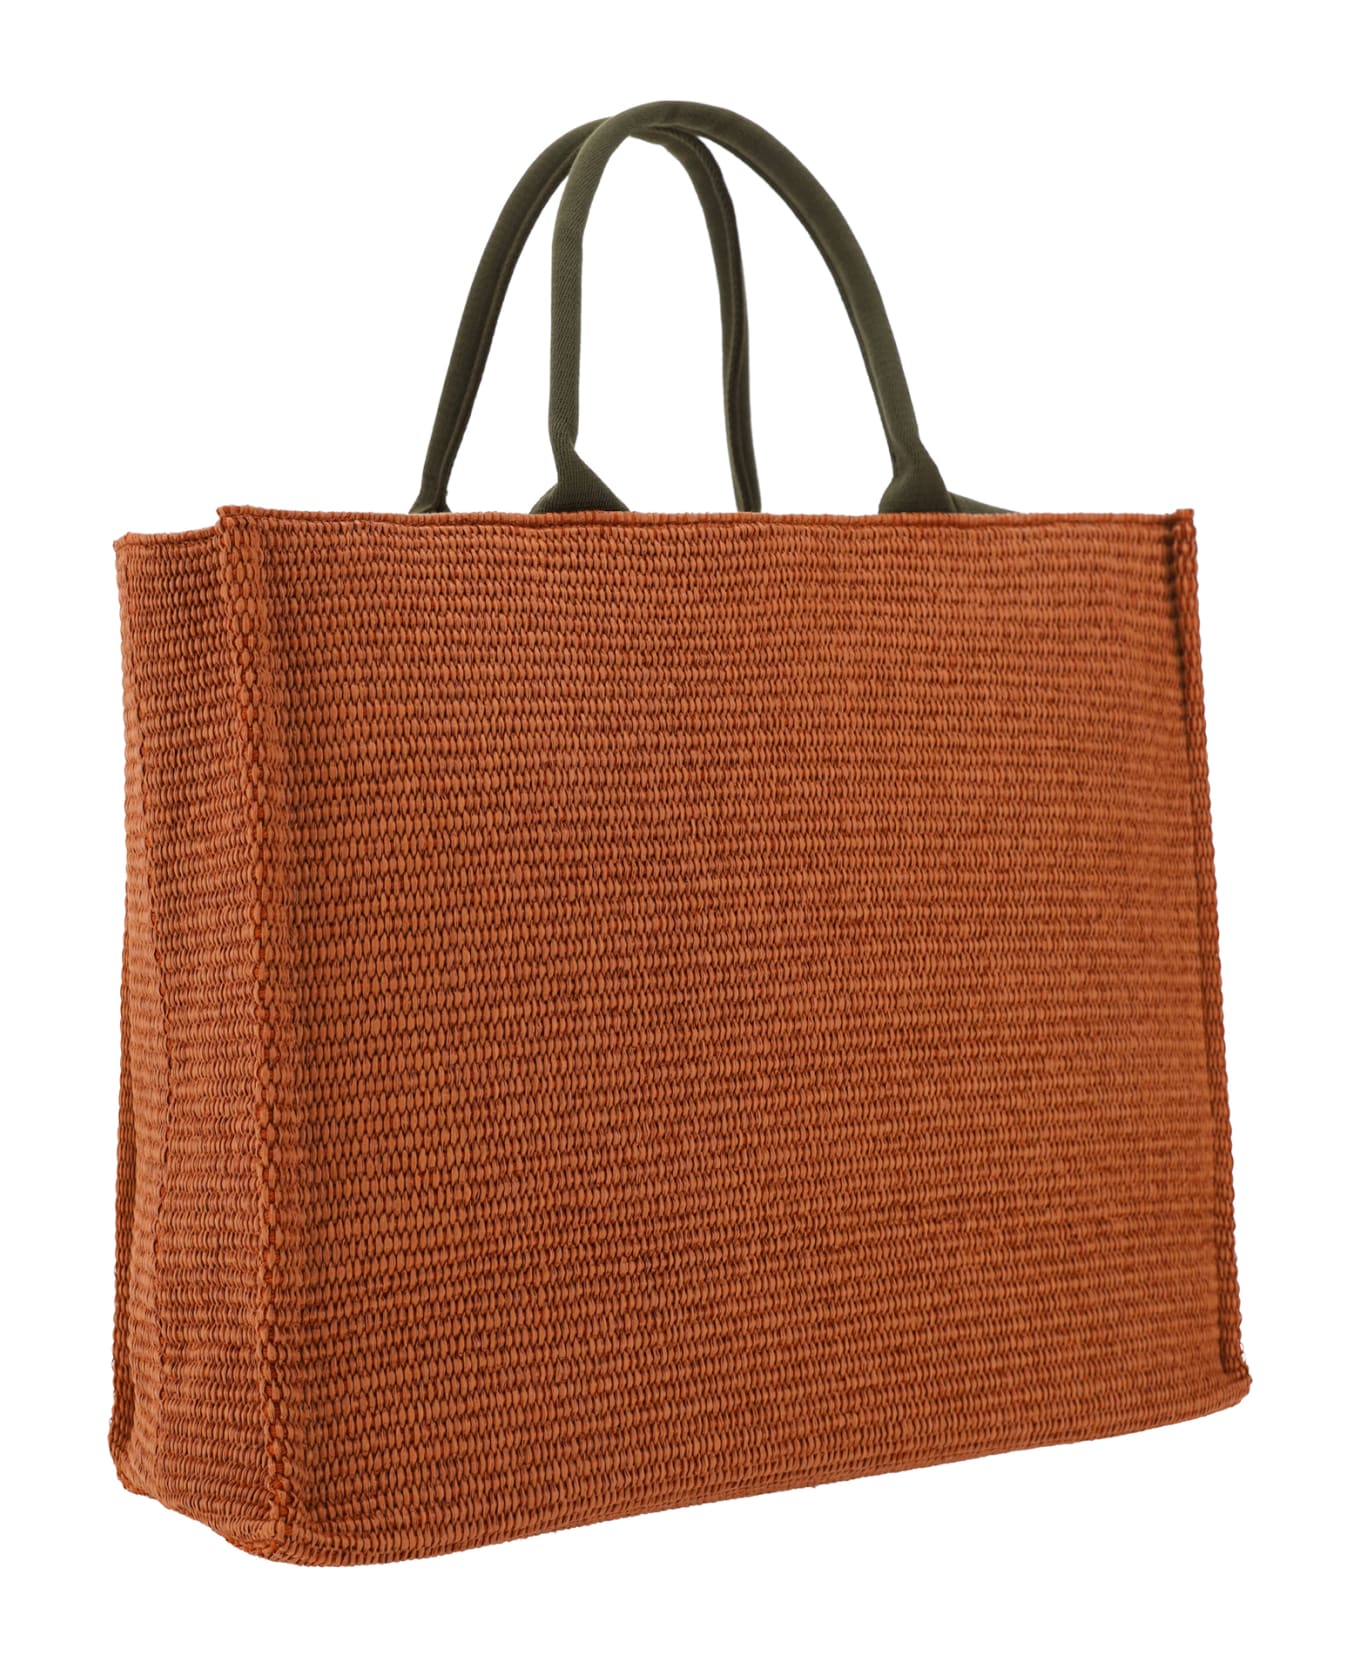 Marni Handbag - Brick/olive